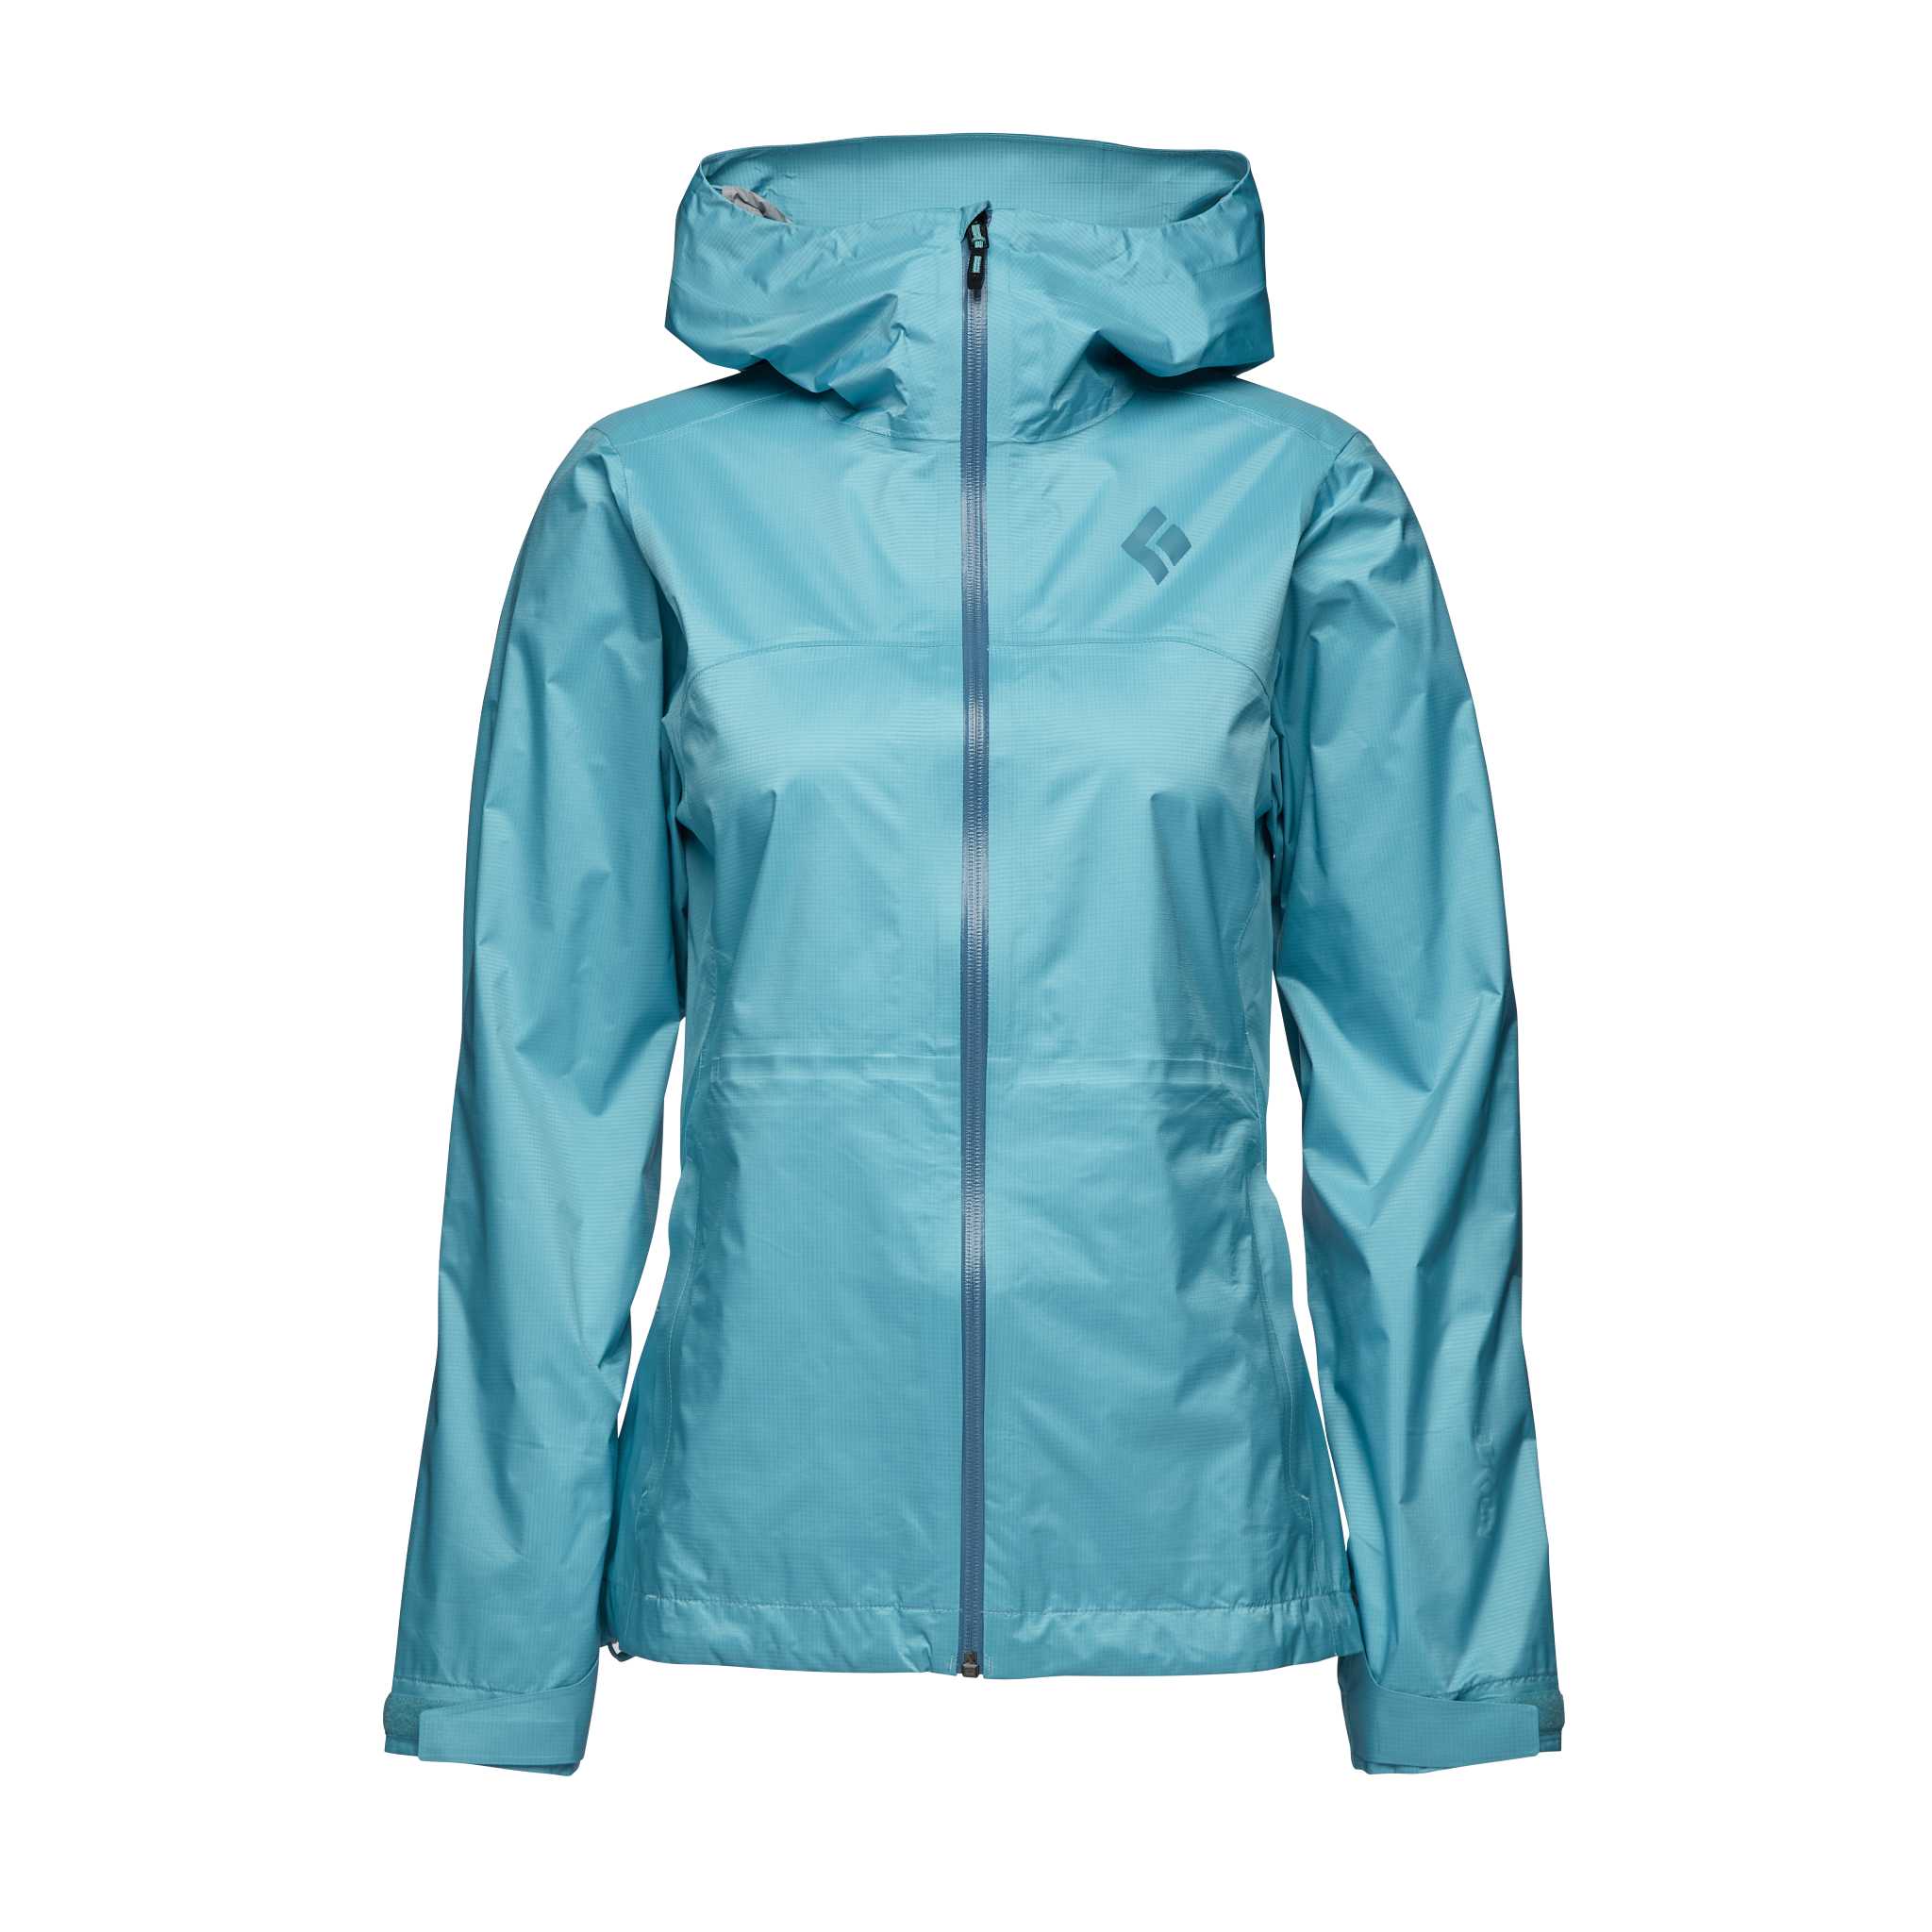 Black Diamond Equipment Women's Treeline Rain Shell Jacket, XS Coastal Blue